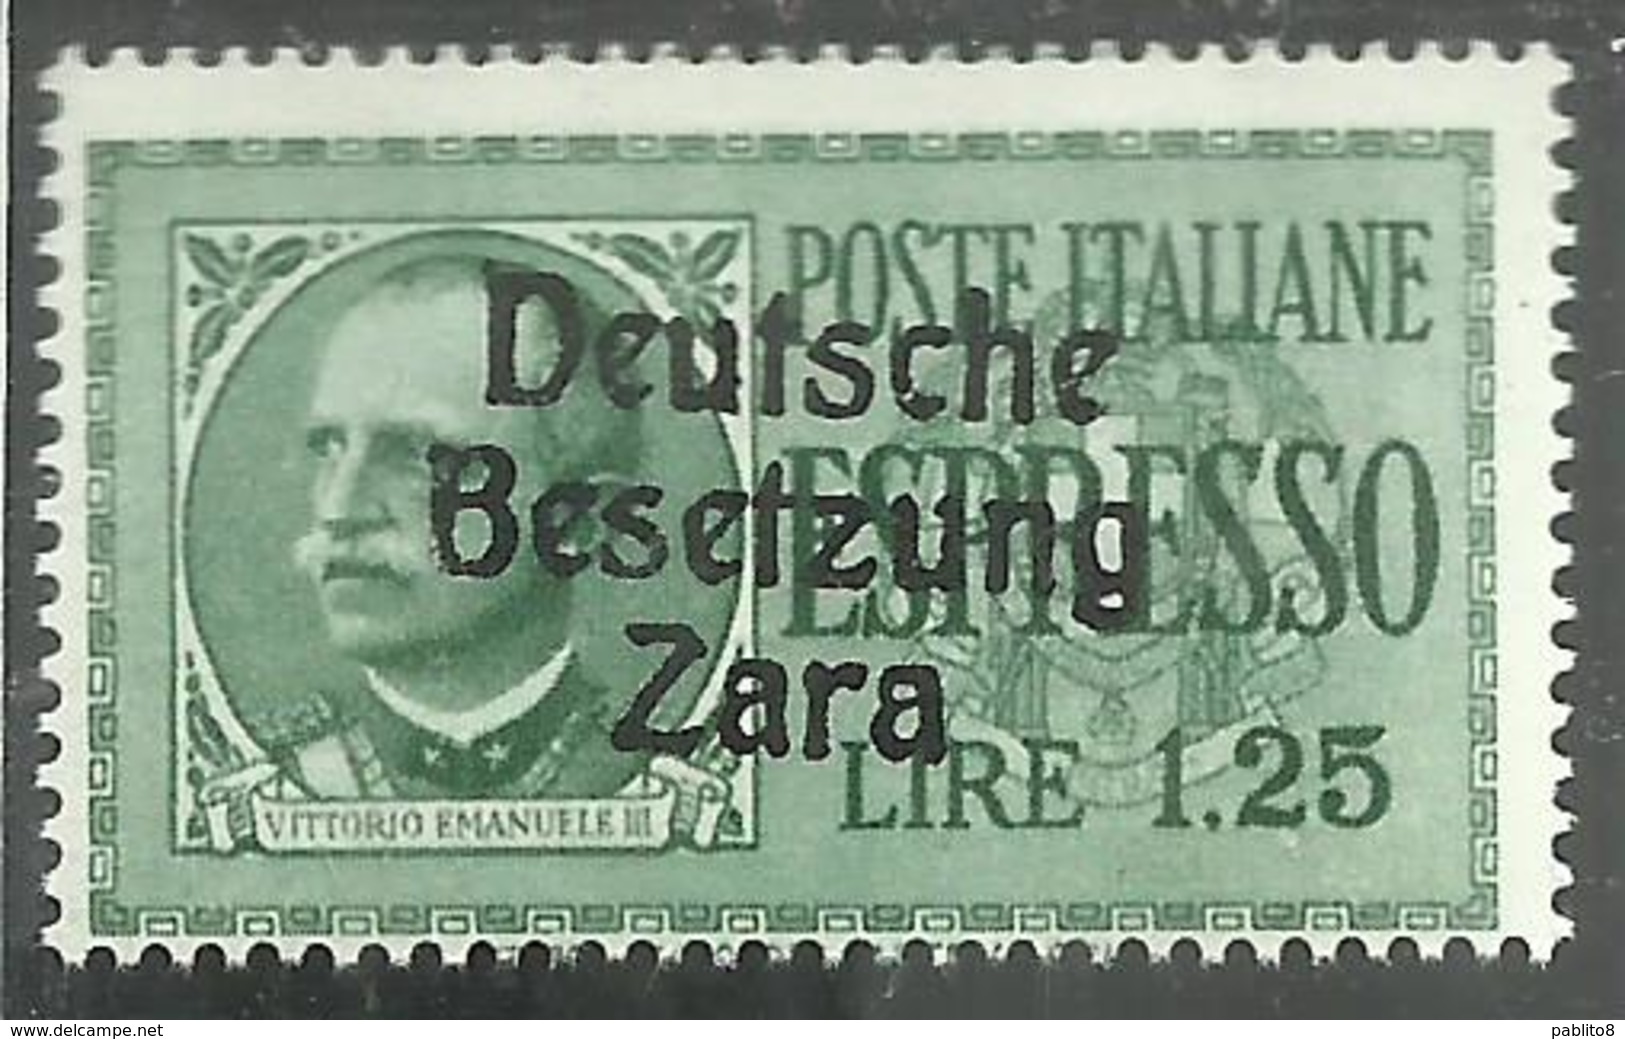 ZARA OCCUPAZIONE TEDESCA GERMAN OCCUPATION 1943 ESPRESSO SPECIAL DELIVERY LIRE 1,25 MNH - German Occ.: Zara